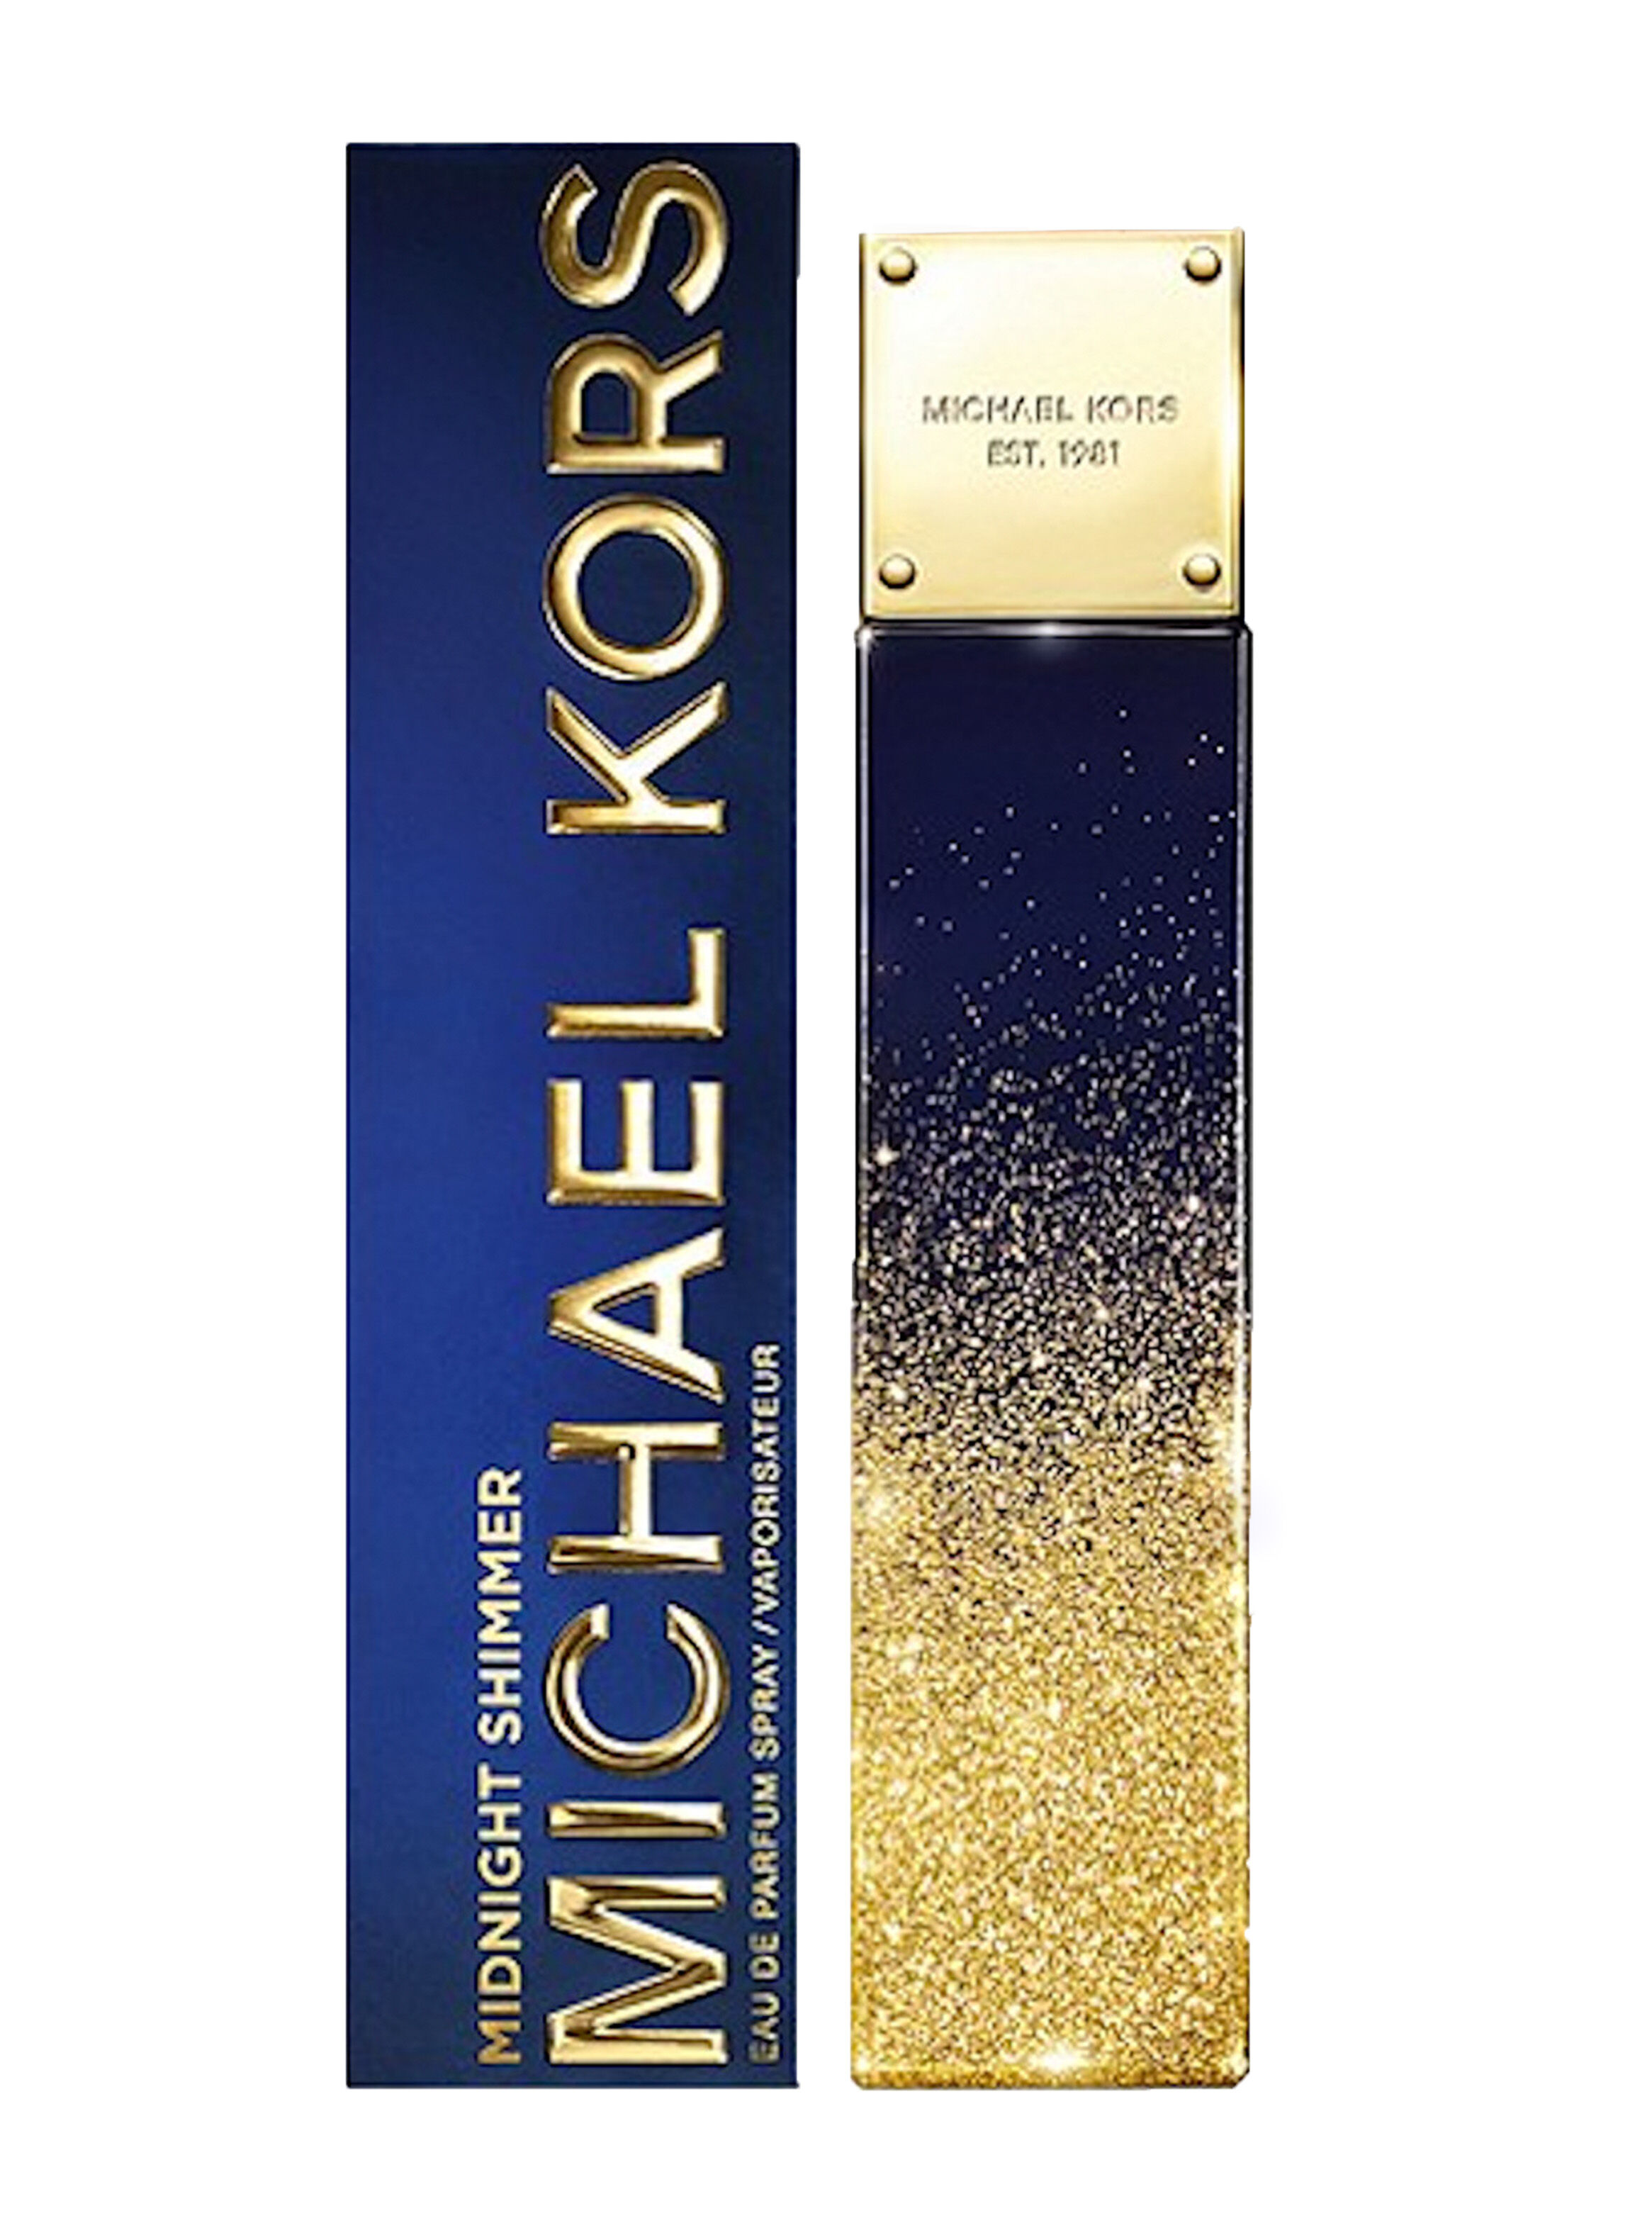 Michael Kors Parfum Twilight Shimmer Discount  azccomco 1692326352